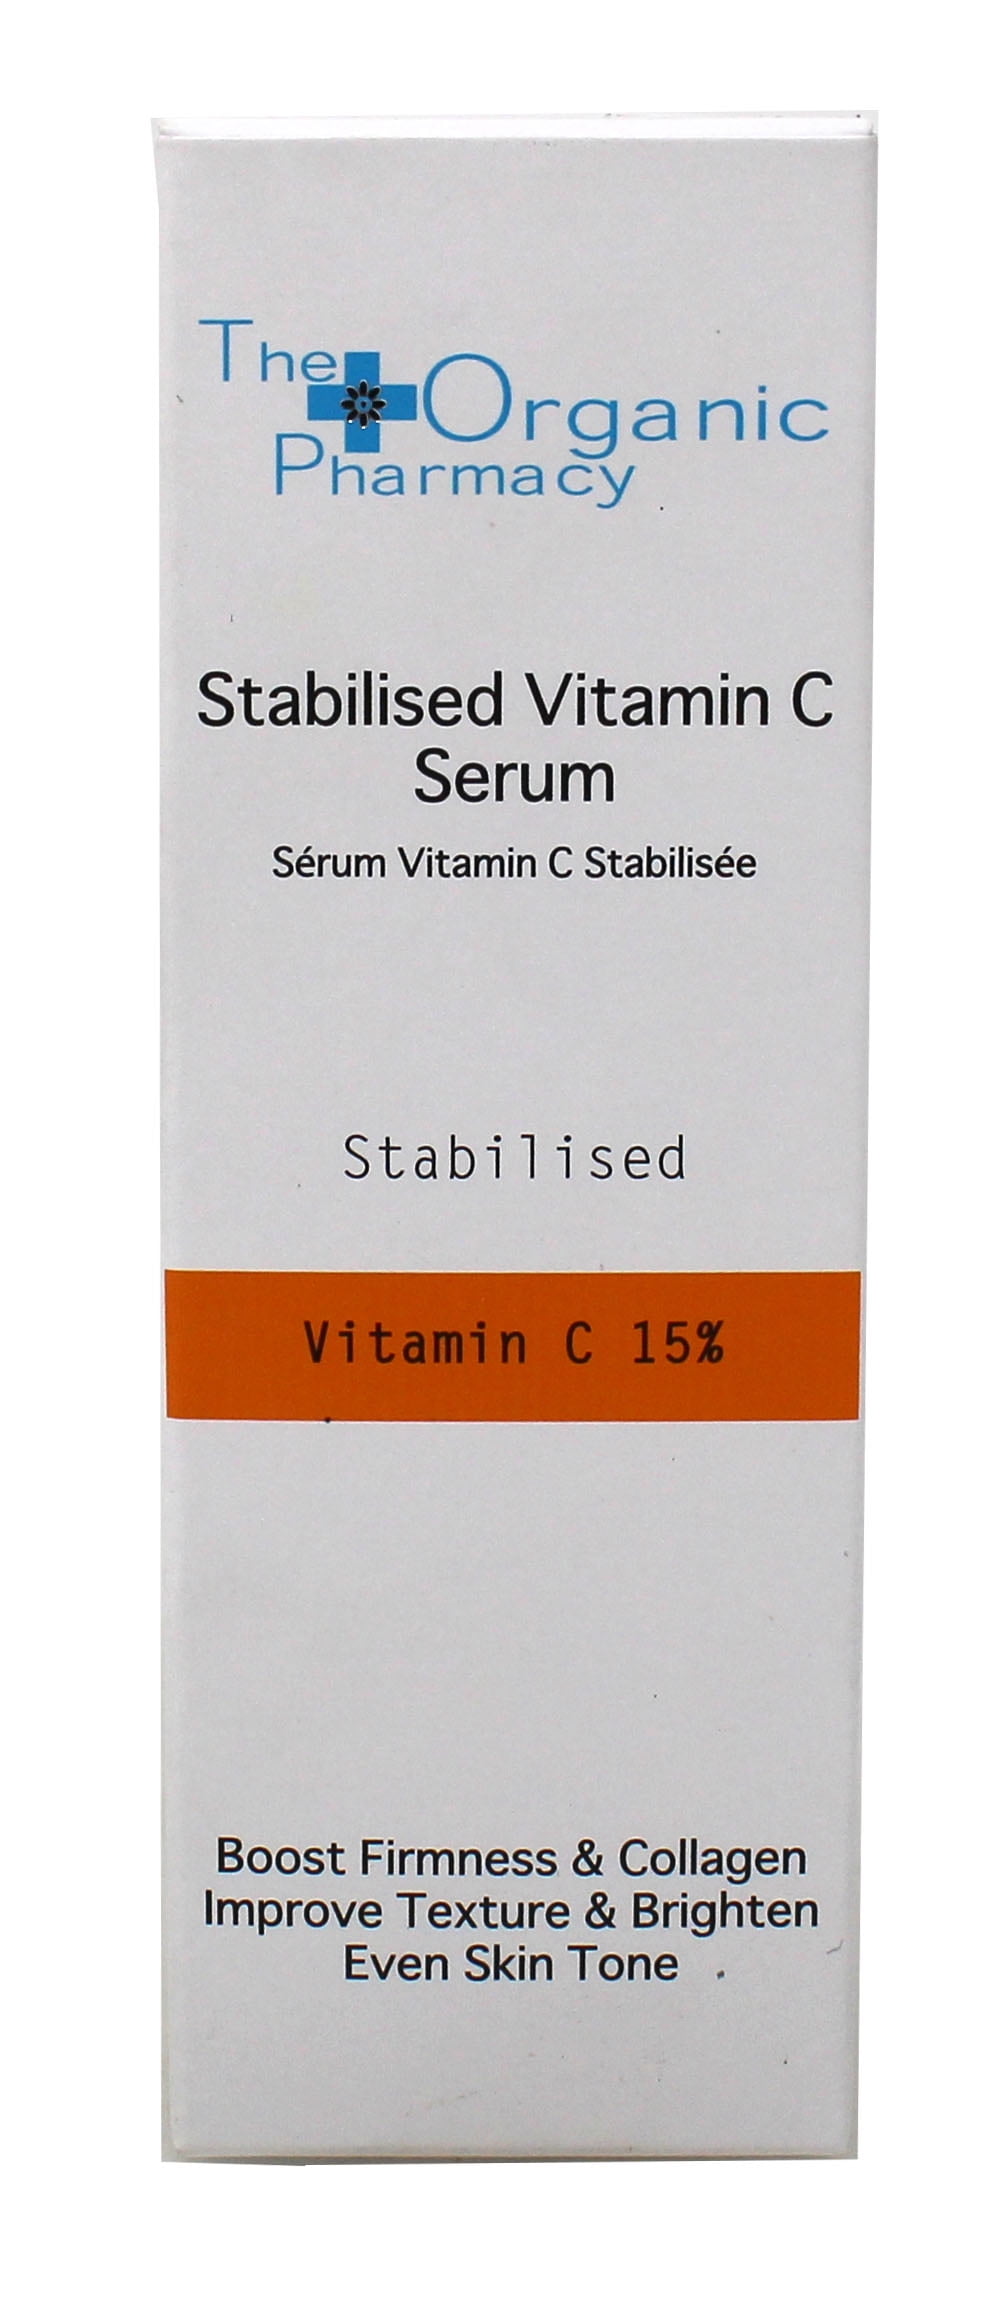 The Organic Pharmacy Stabilised Vitamin C Serum 1 - Walmart.com